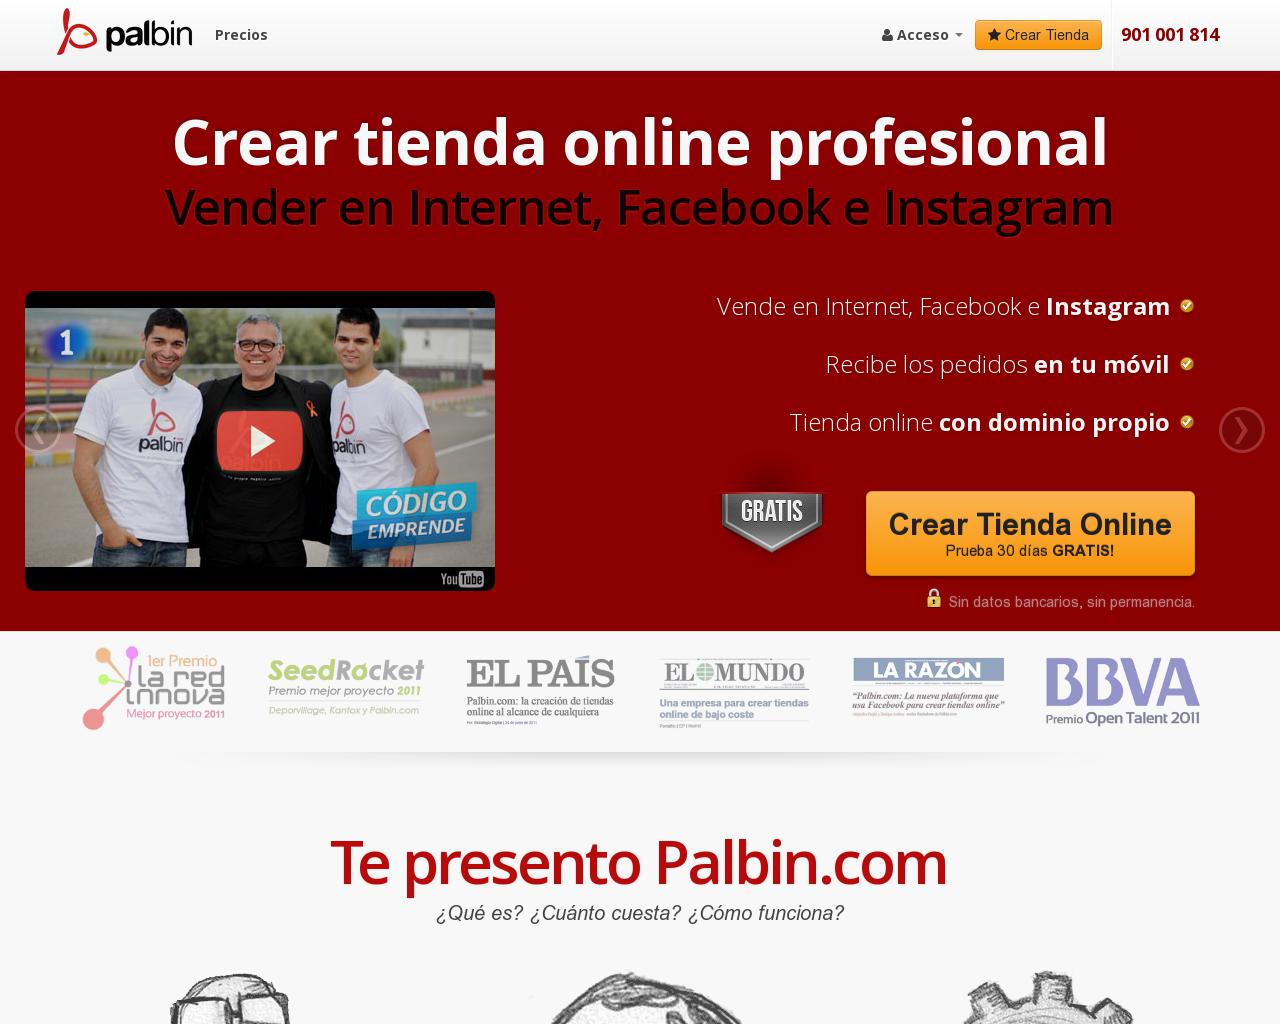 palbin.com